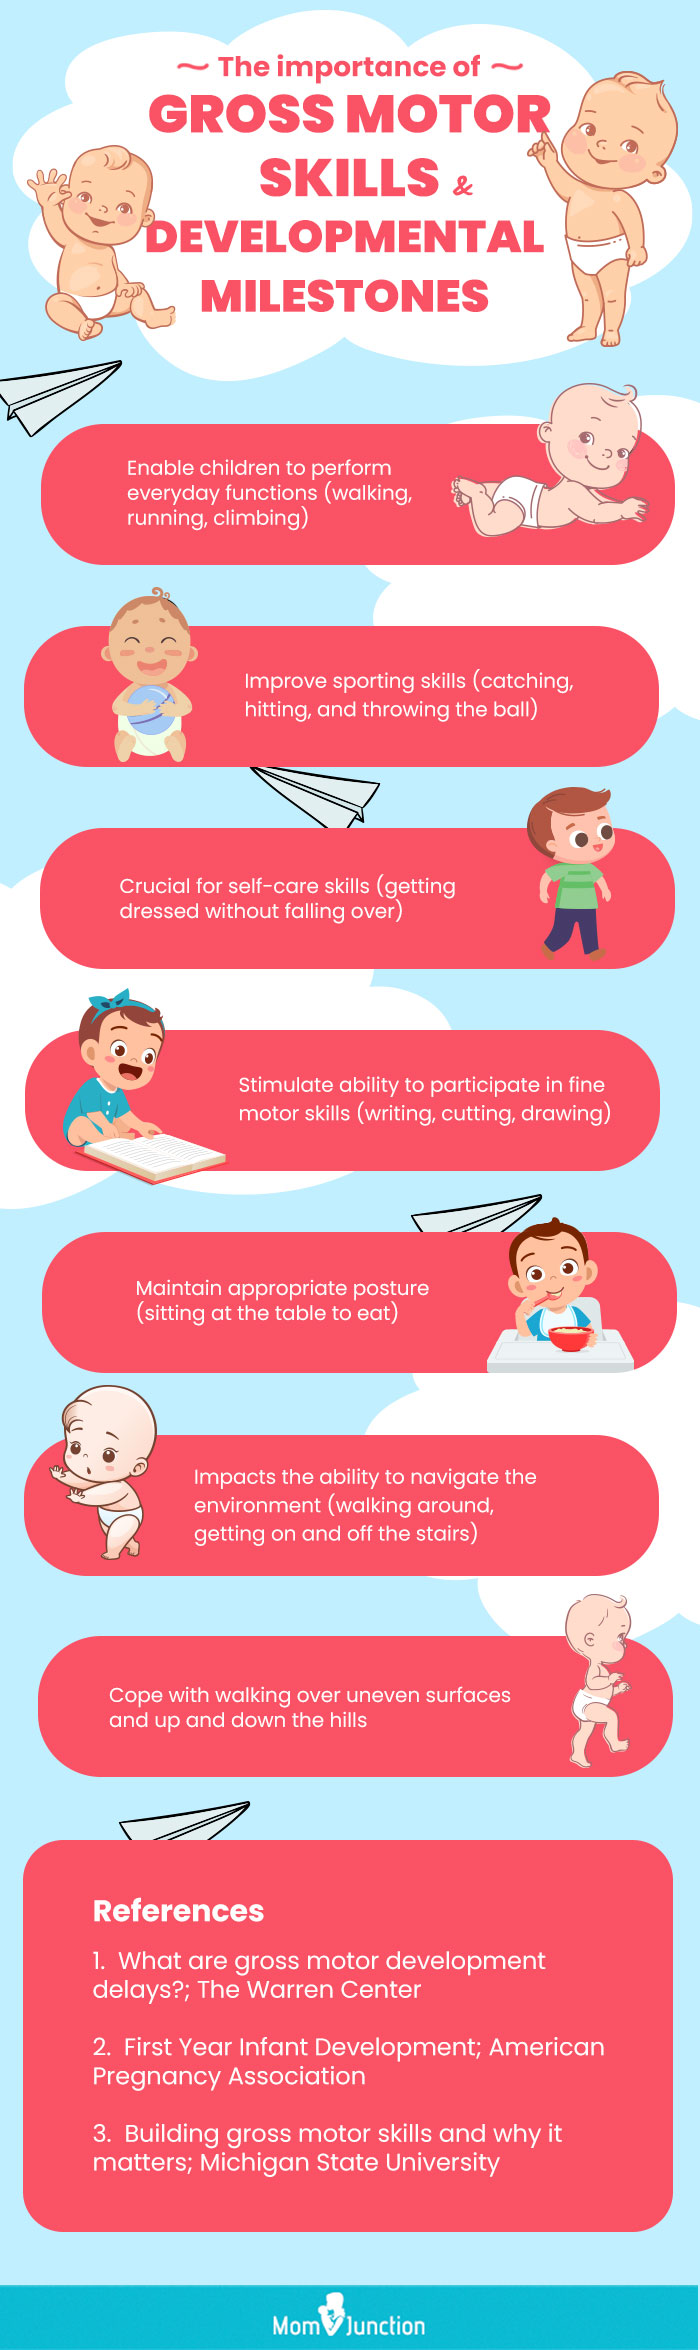 importance of gross motor skills and developmental milestones [infographic]